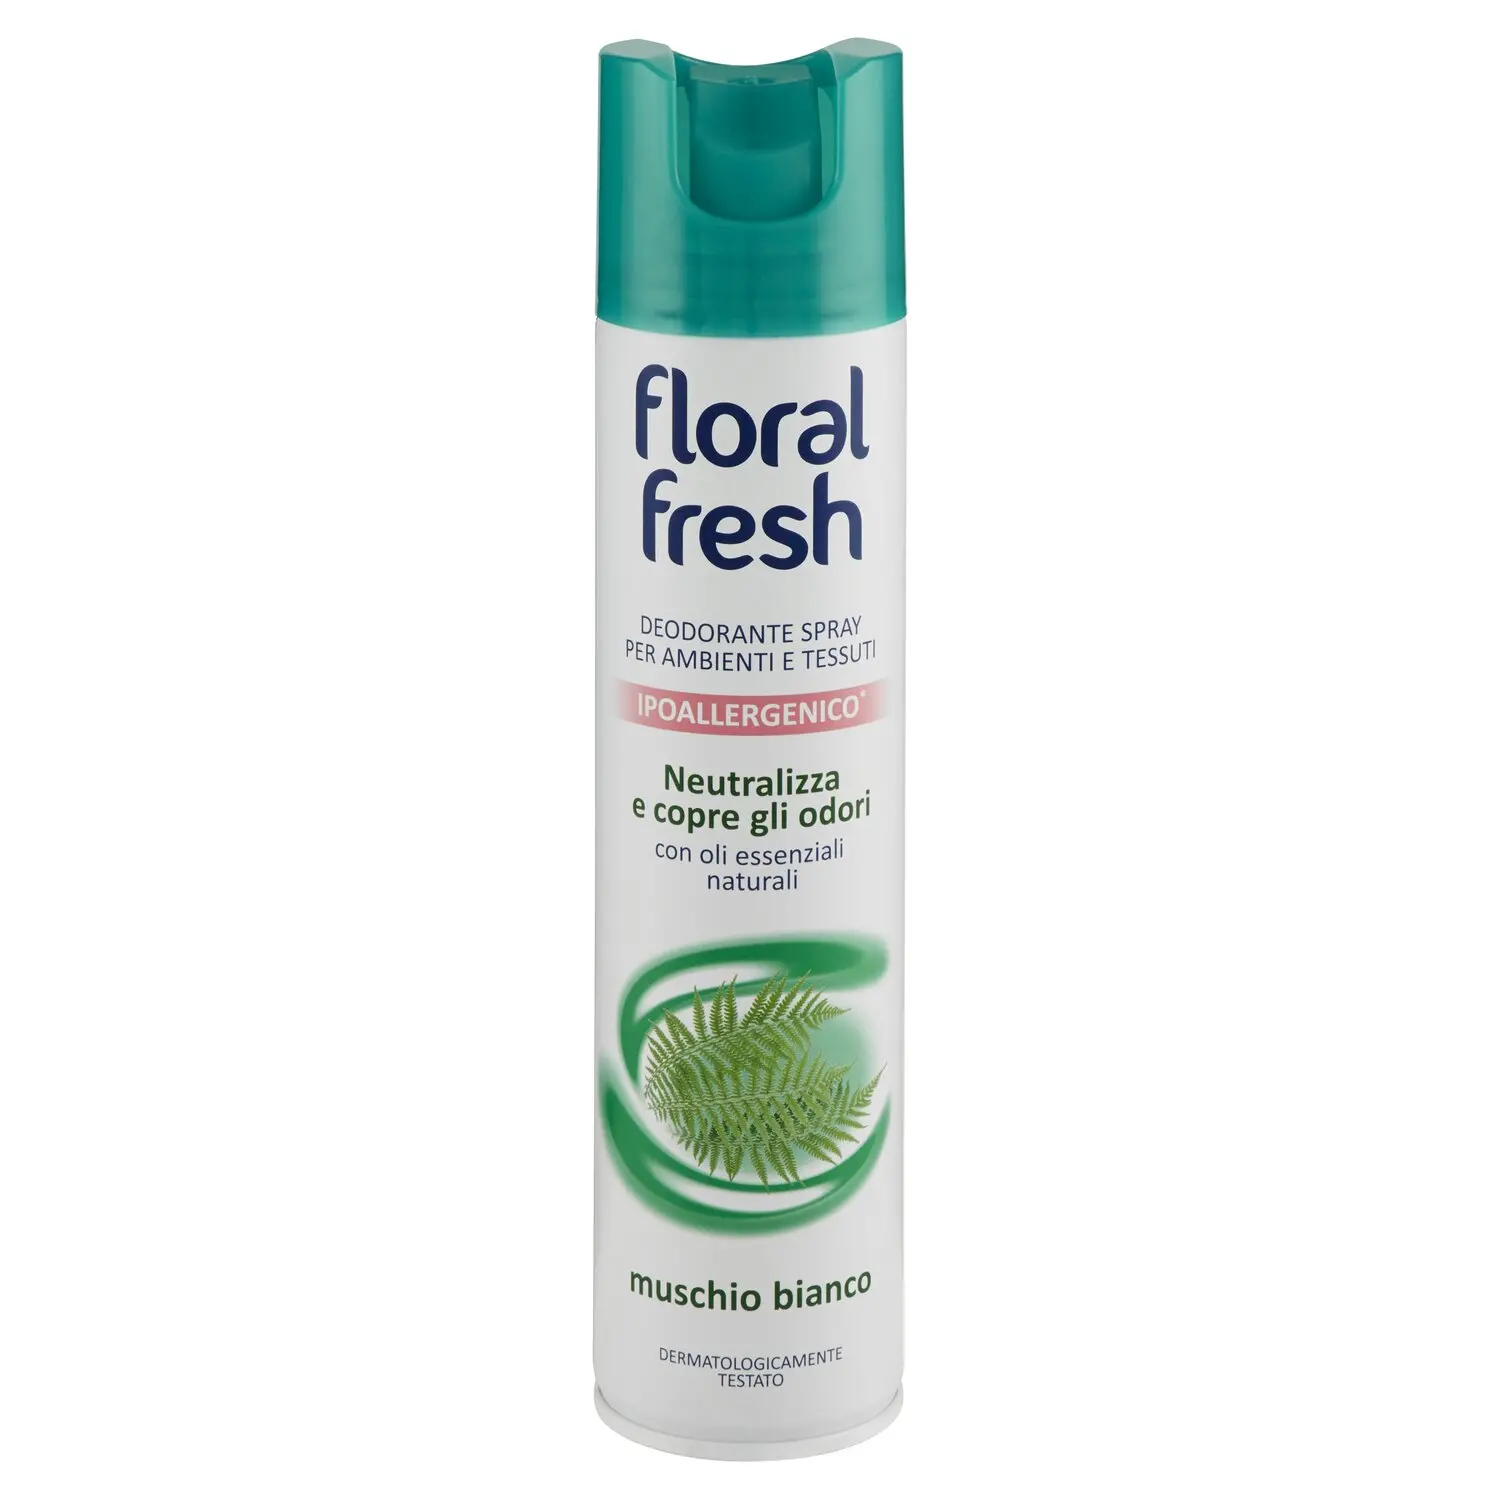 floral fresh Deodorante Spray per Ambienti e Tessuti muschio bianco 300 ml